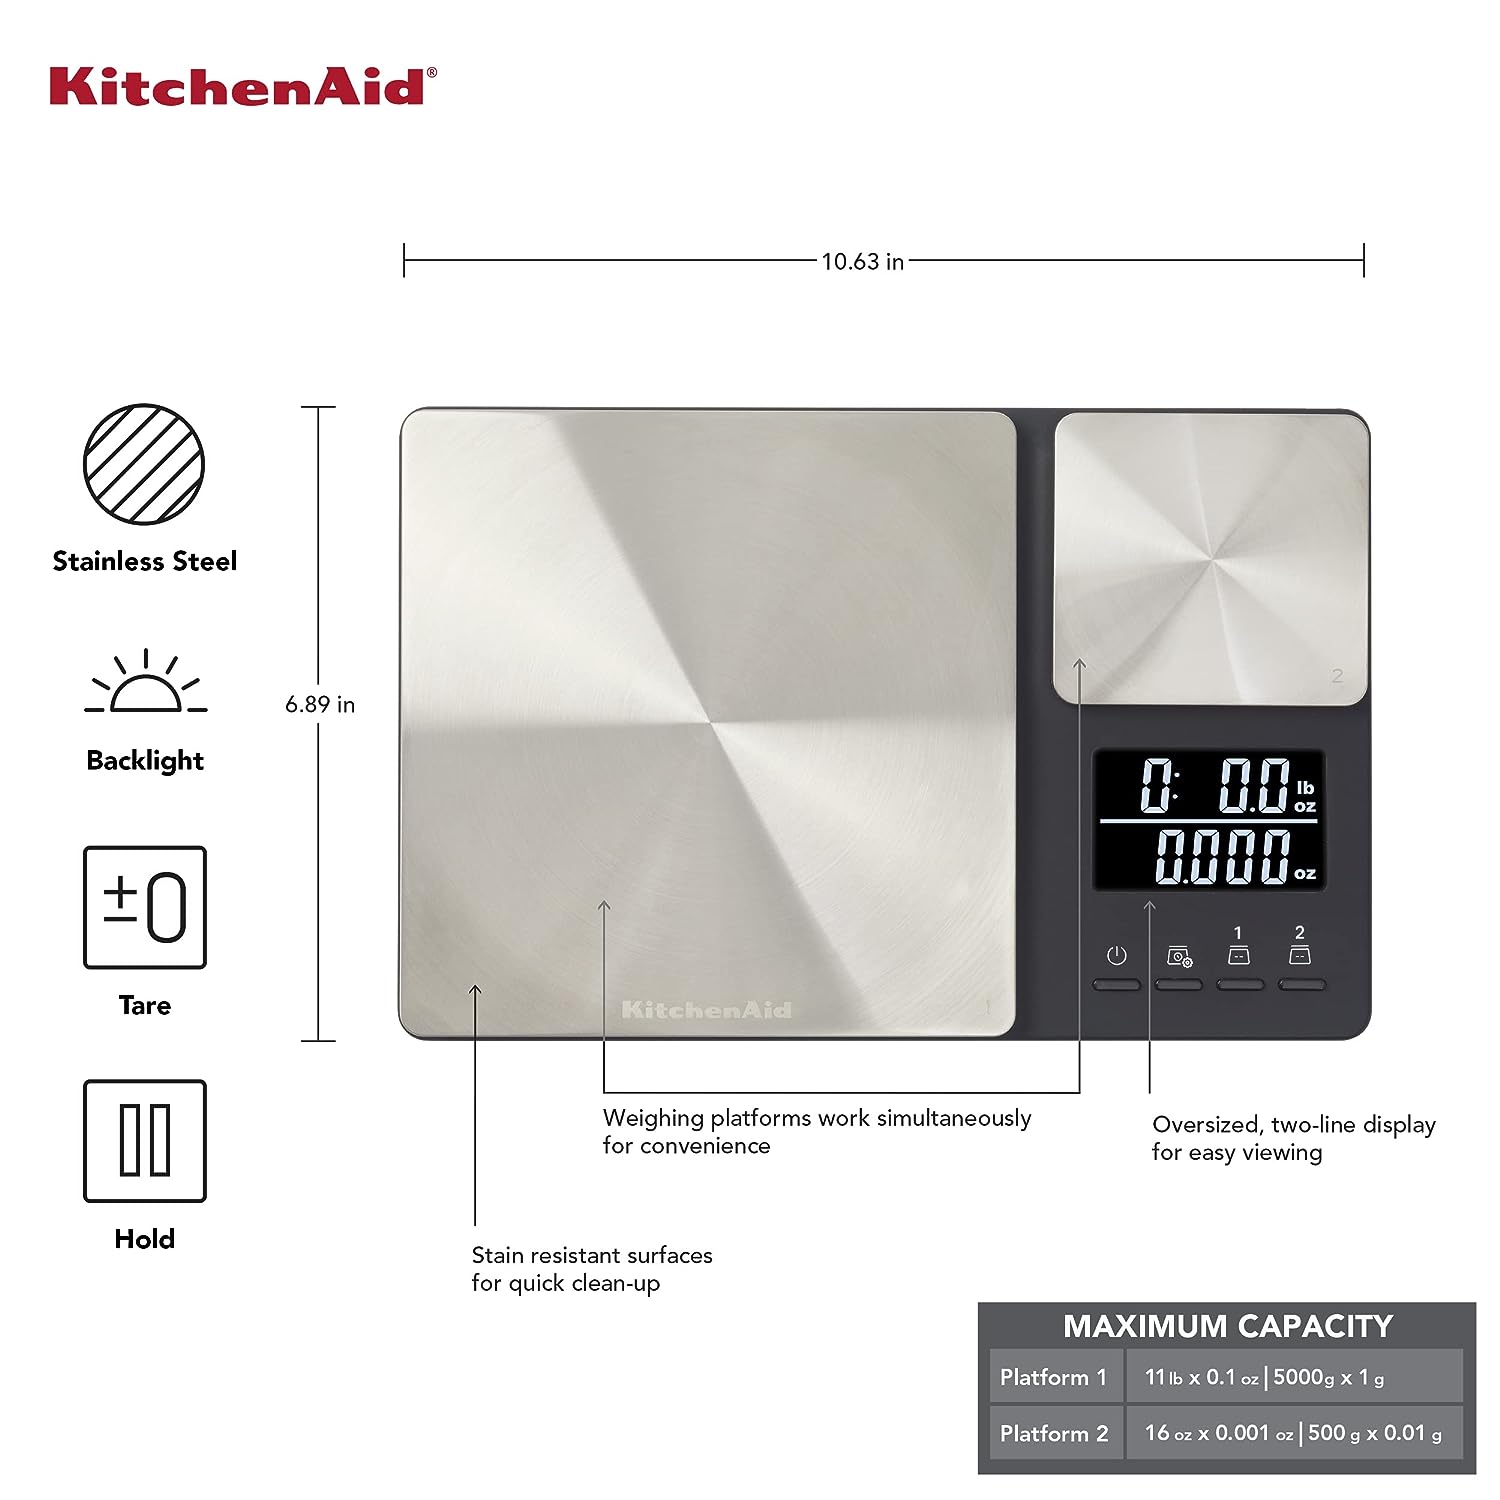 KitchenAid KQ909 Dual Platform Food Scale: Perfect Food Scale?